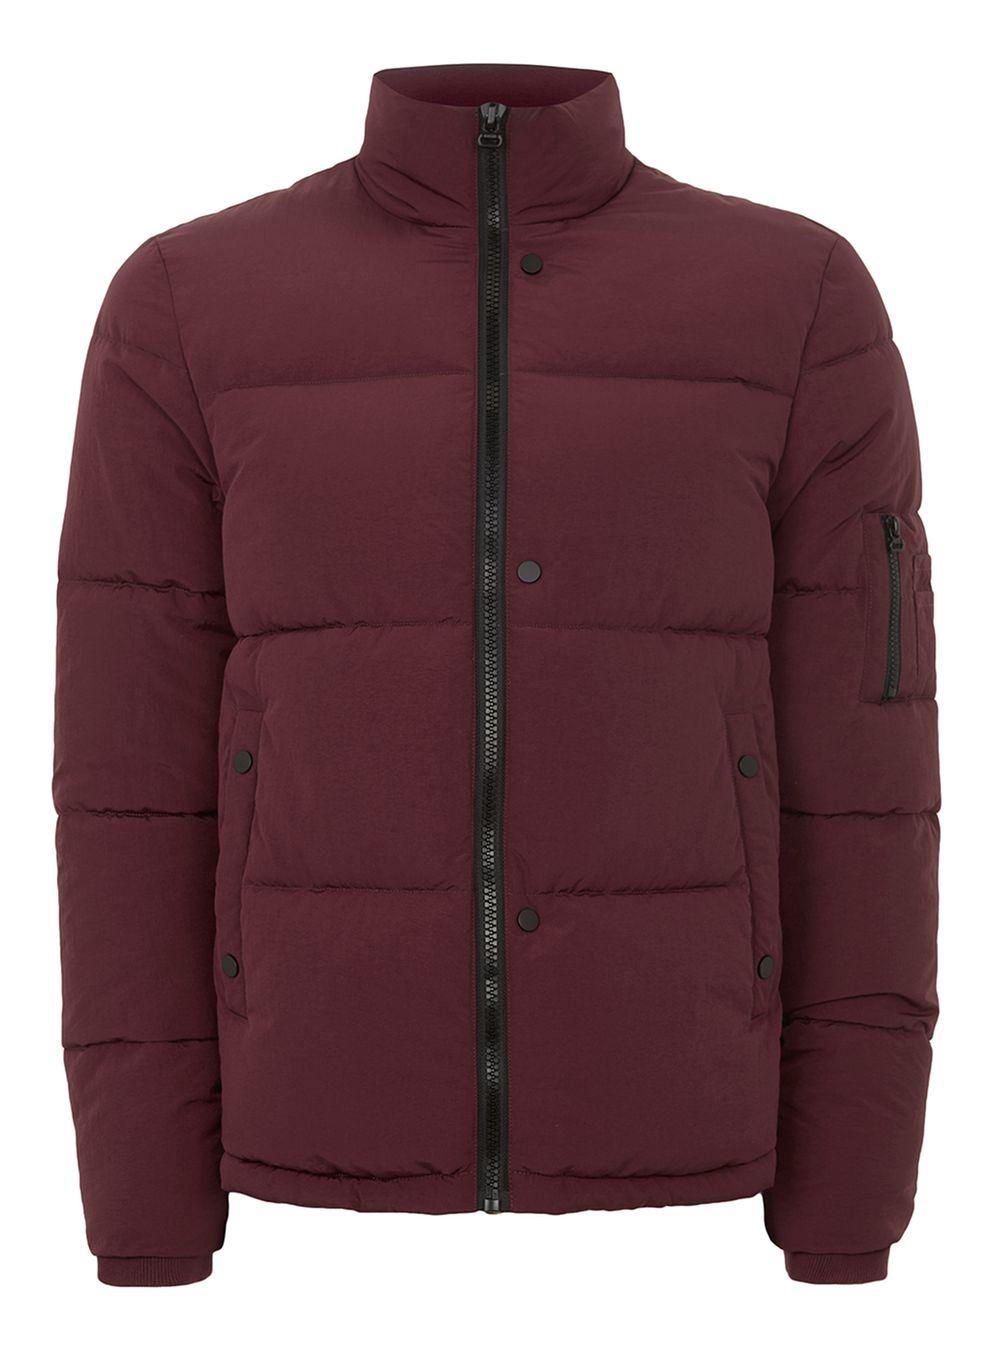 Lyst - Topman Burgundy Puffer Jacket in Red for Men